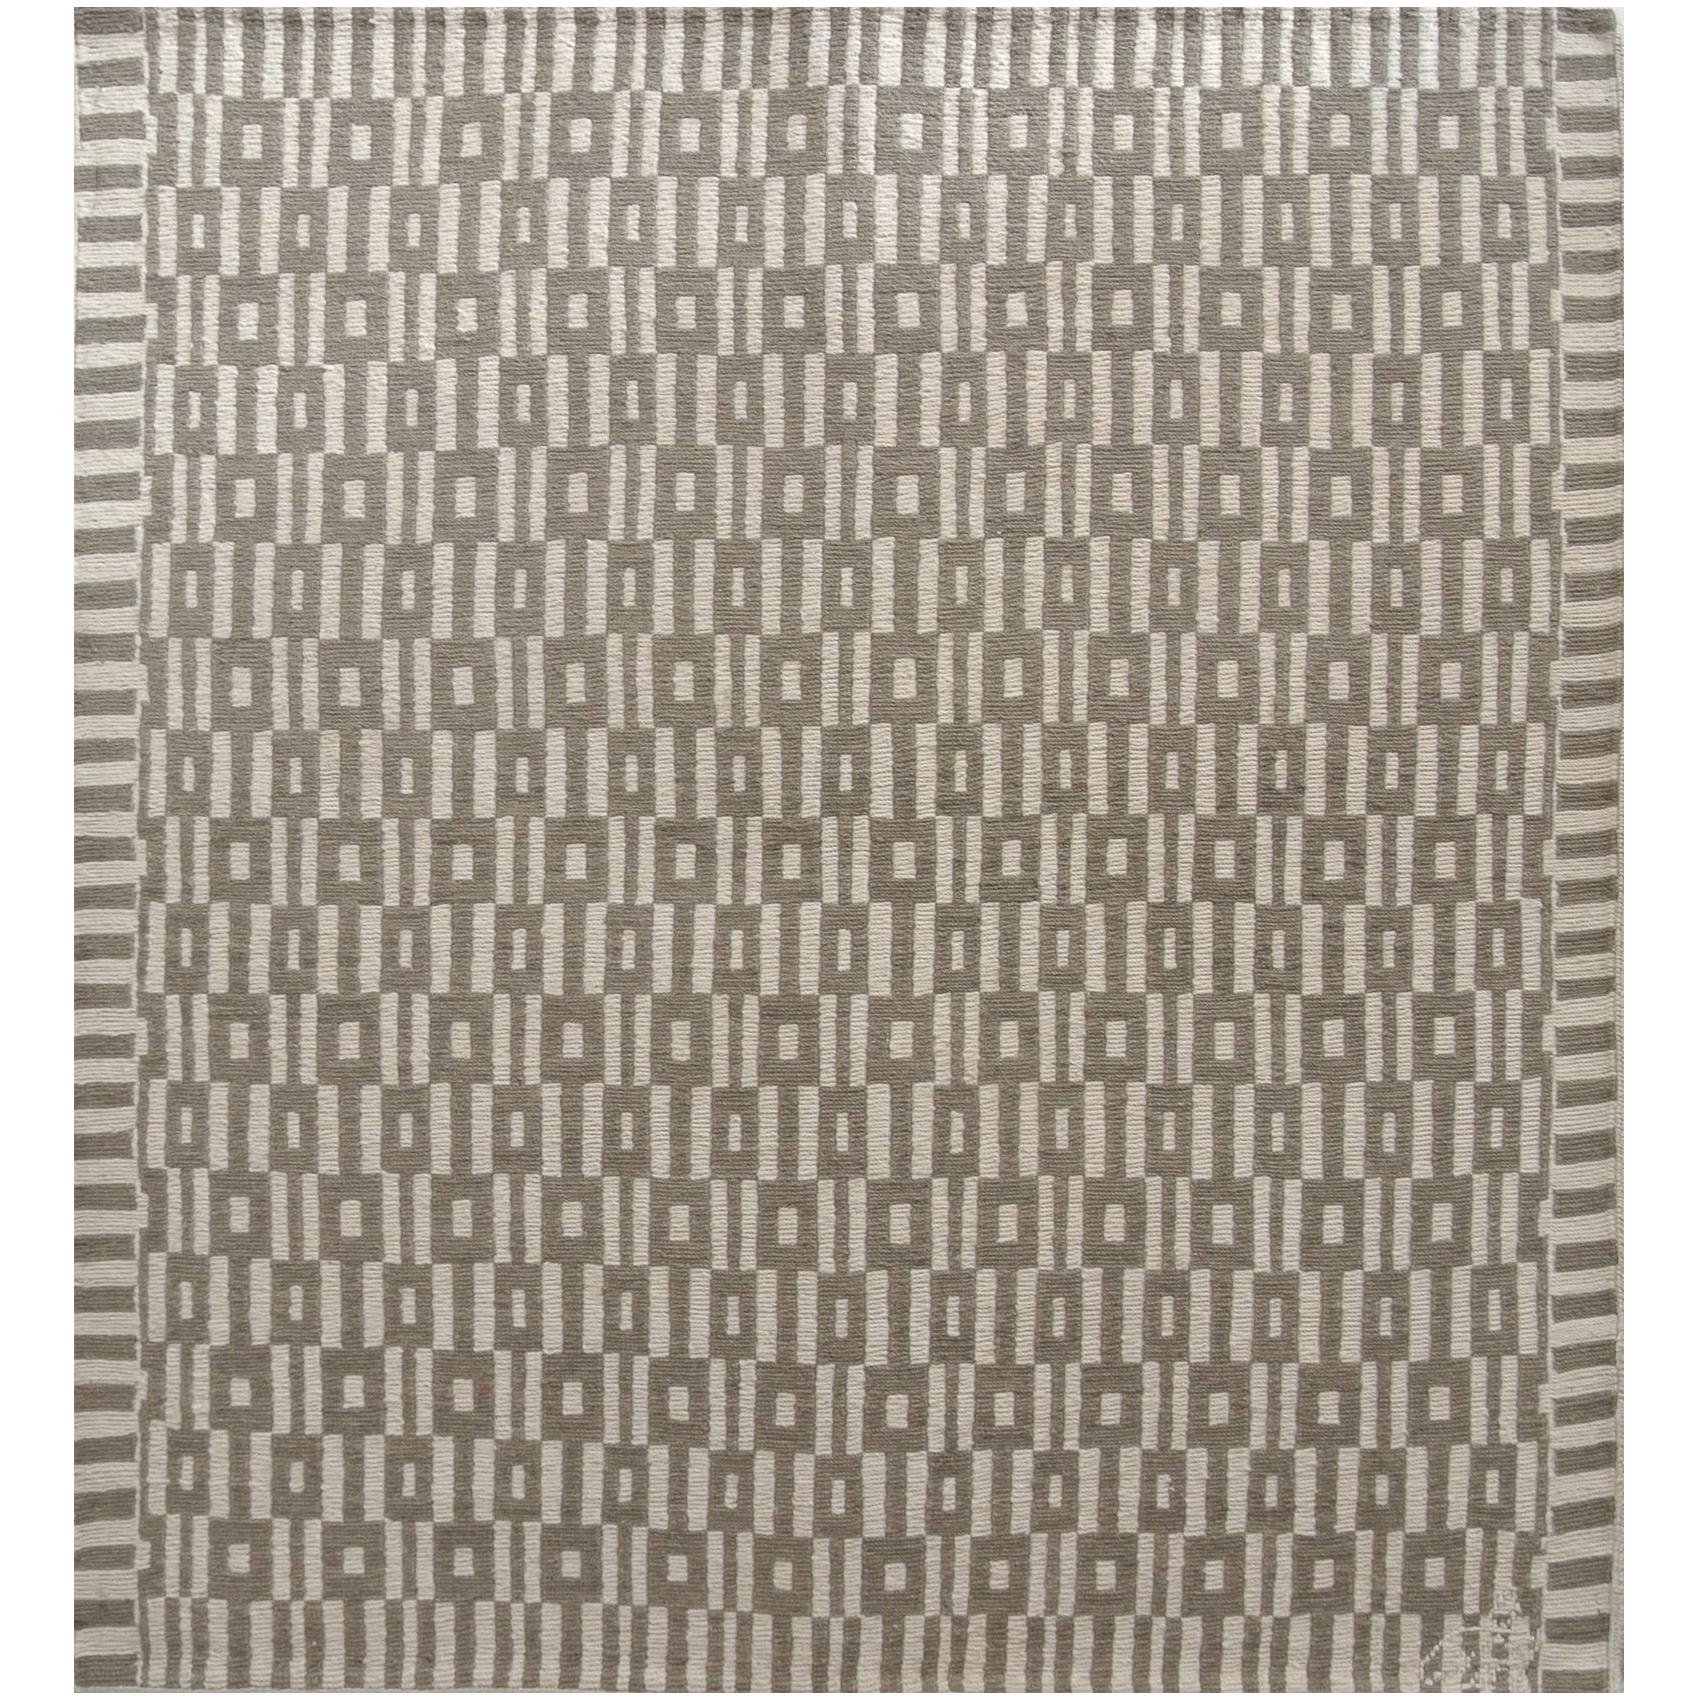  Modern Wool Persian Carpet, Gray and Cream, Orley Shabahang, 3' x 4'